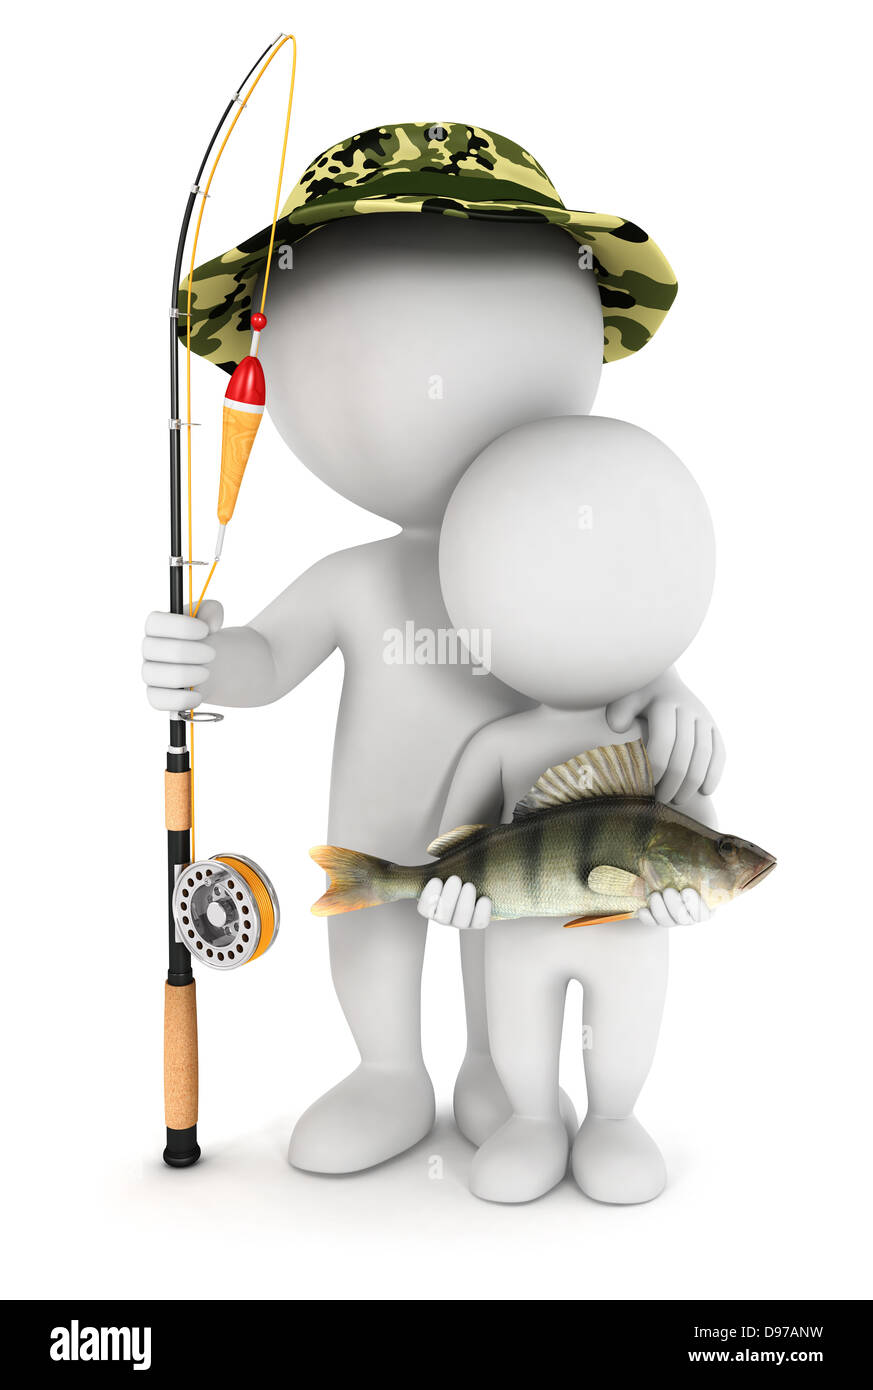 627 Yo Yo Fishing Images, Stock Photos, 3D objects, & Vectors